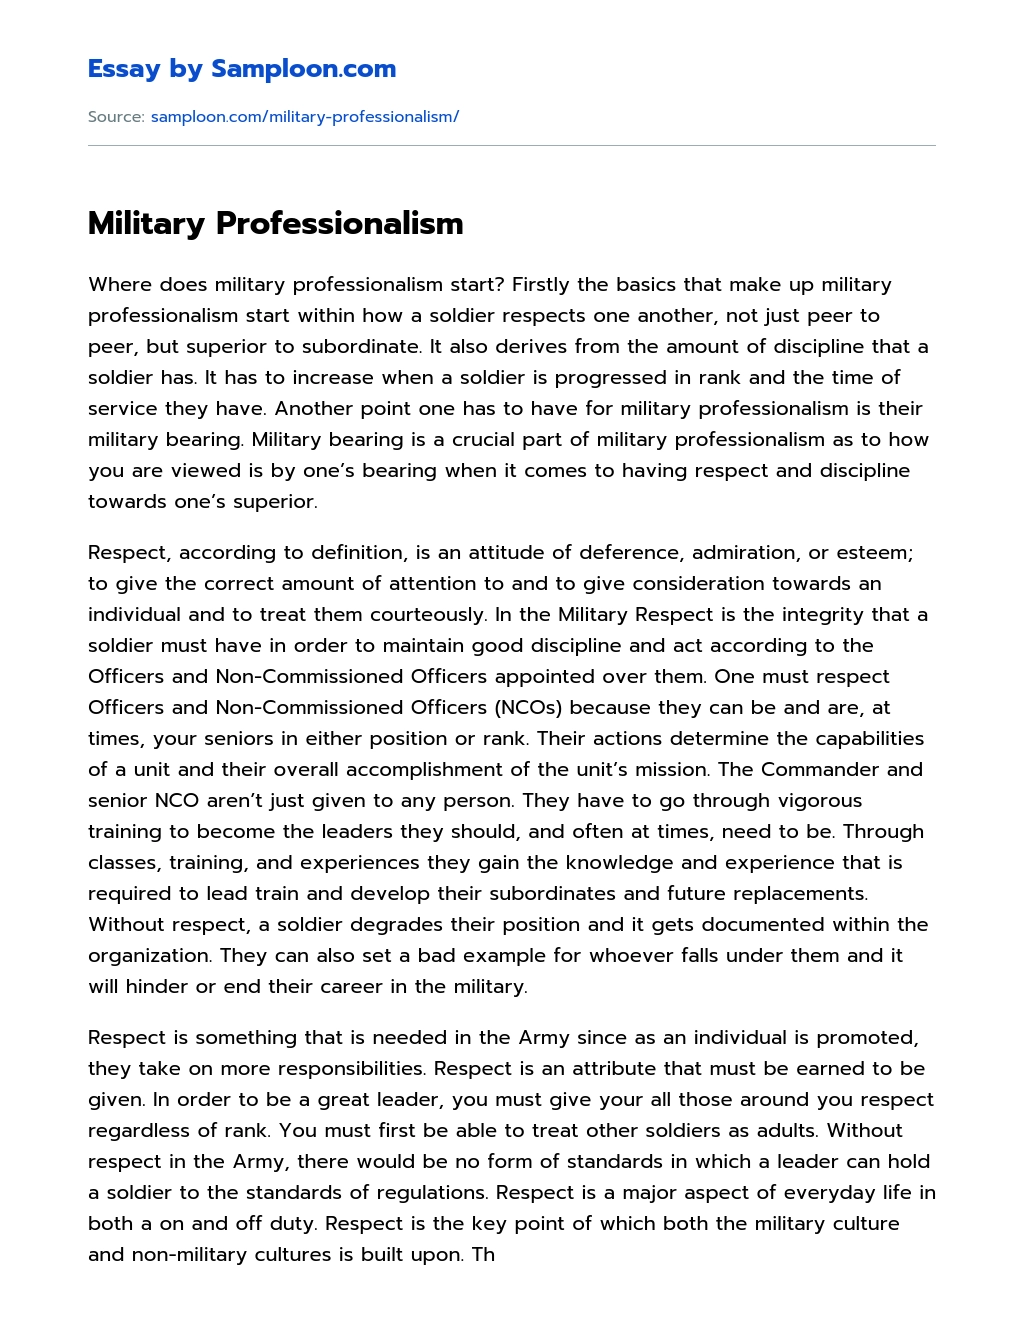 compulsory military service argumentative essay